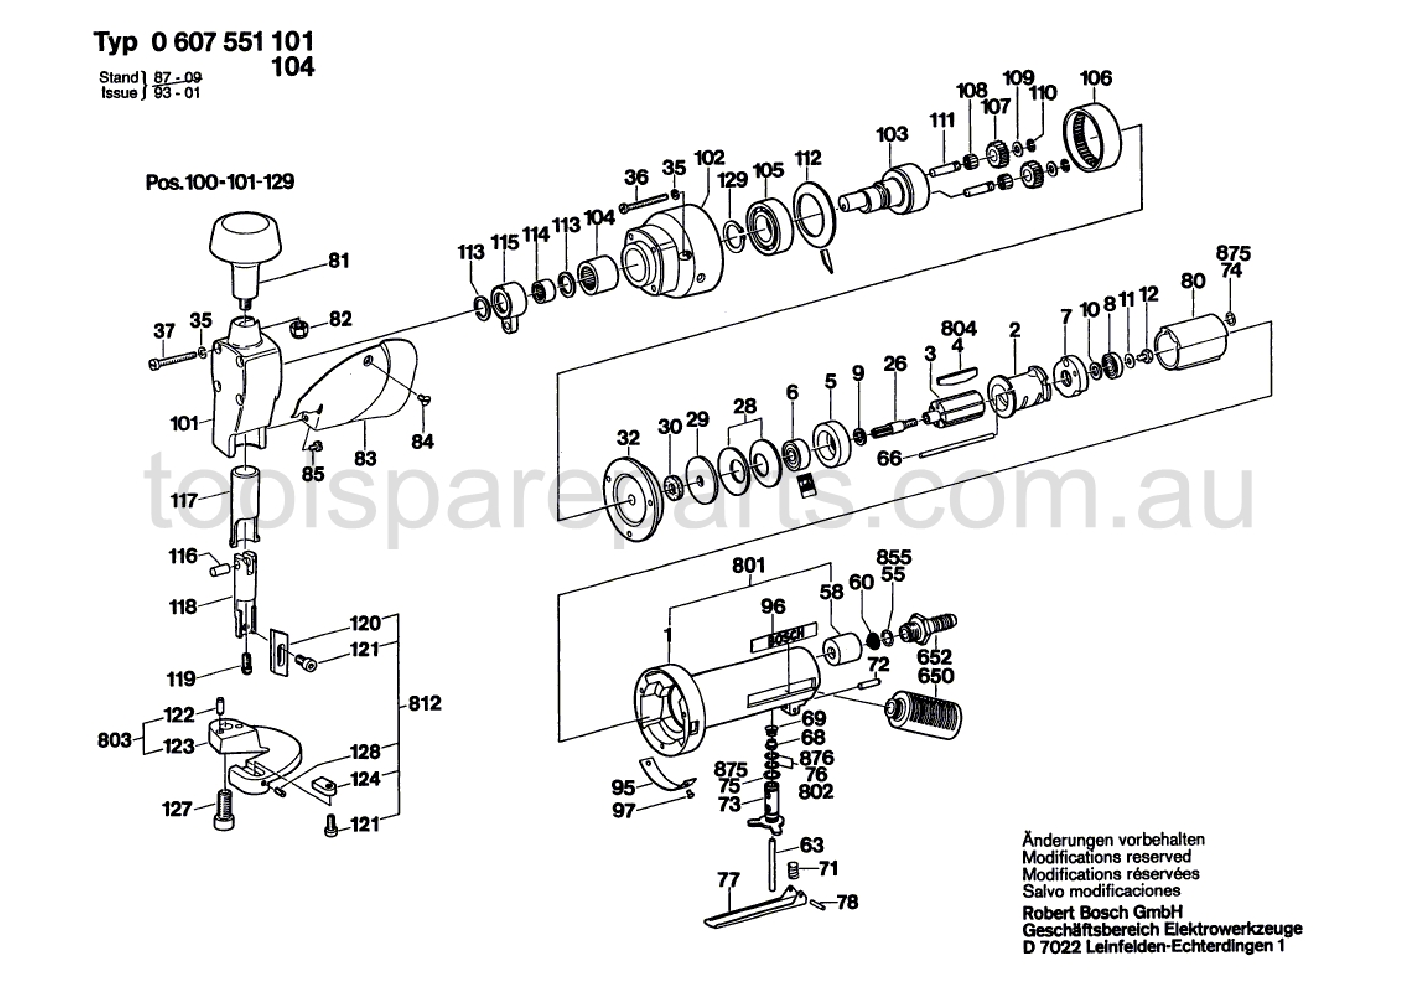 Bosch 370 WATT-SERIE 0607551104  Diagram 1